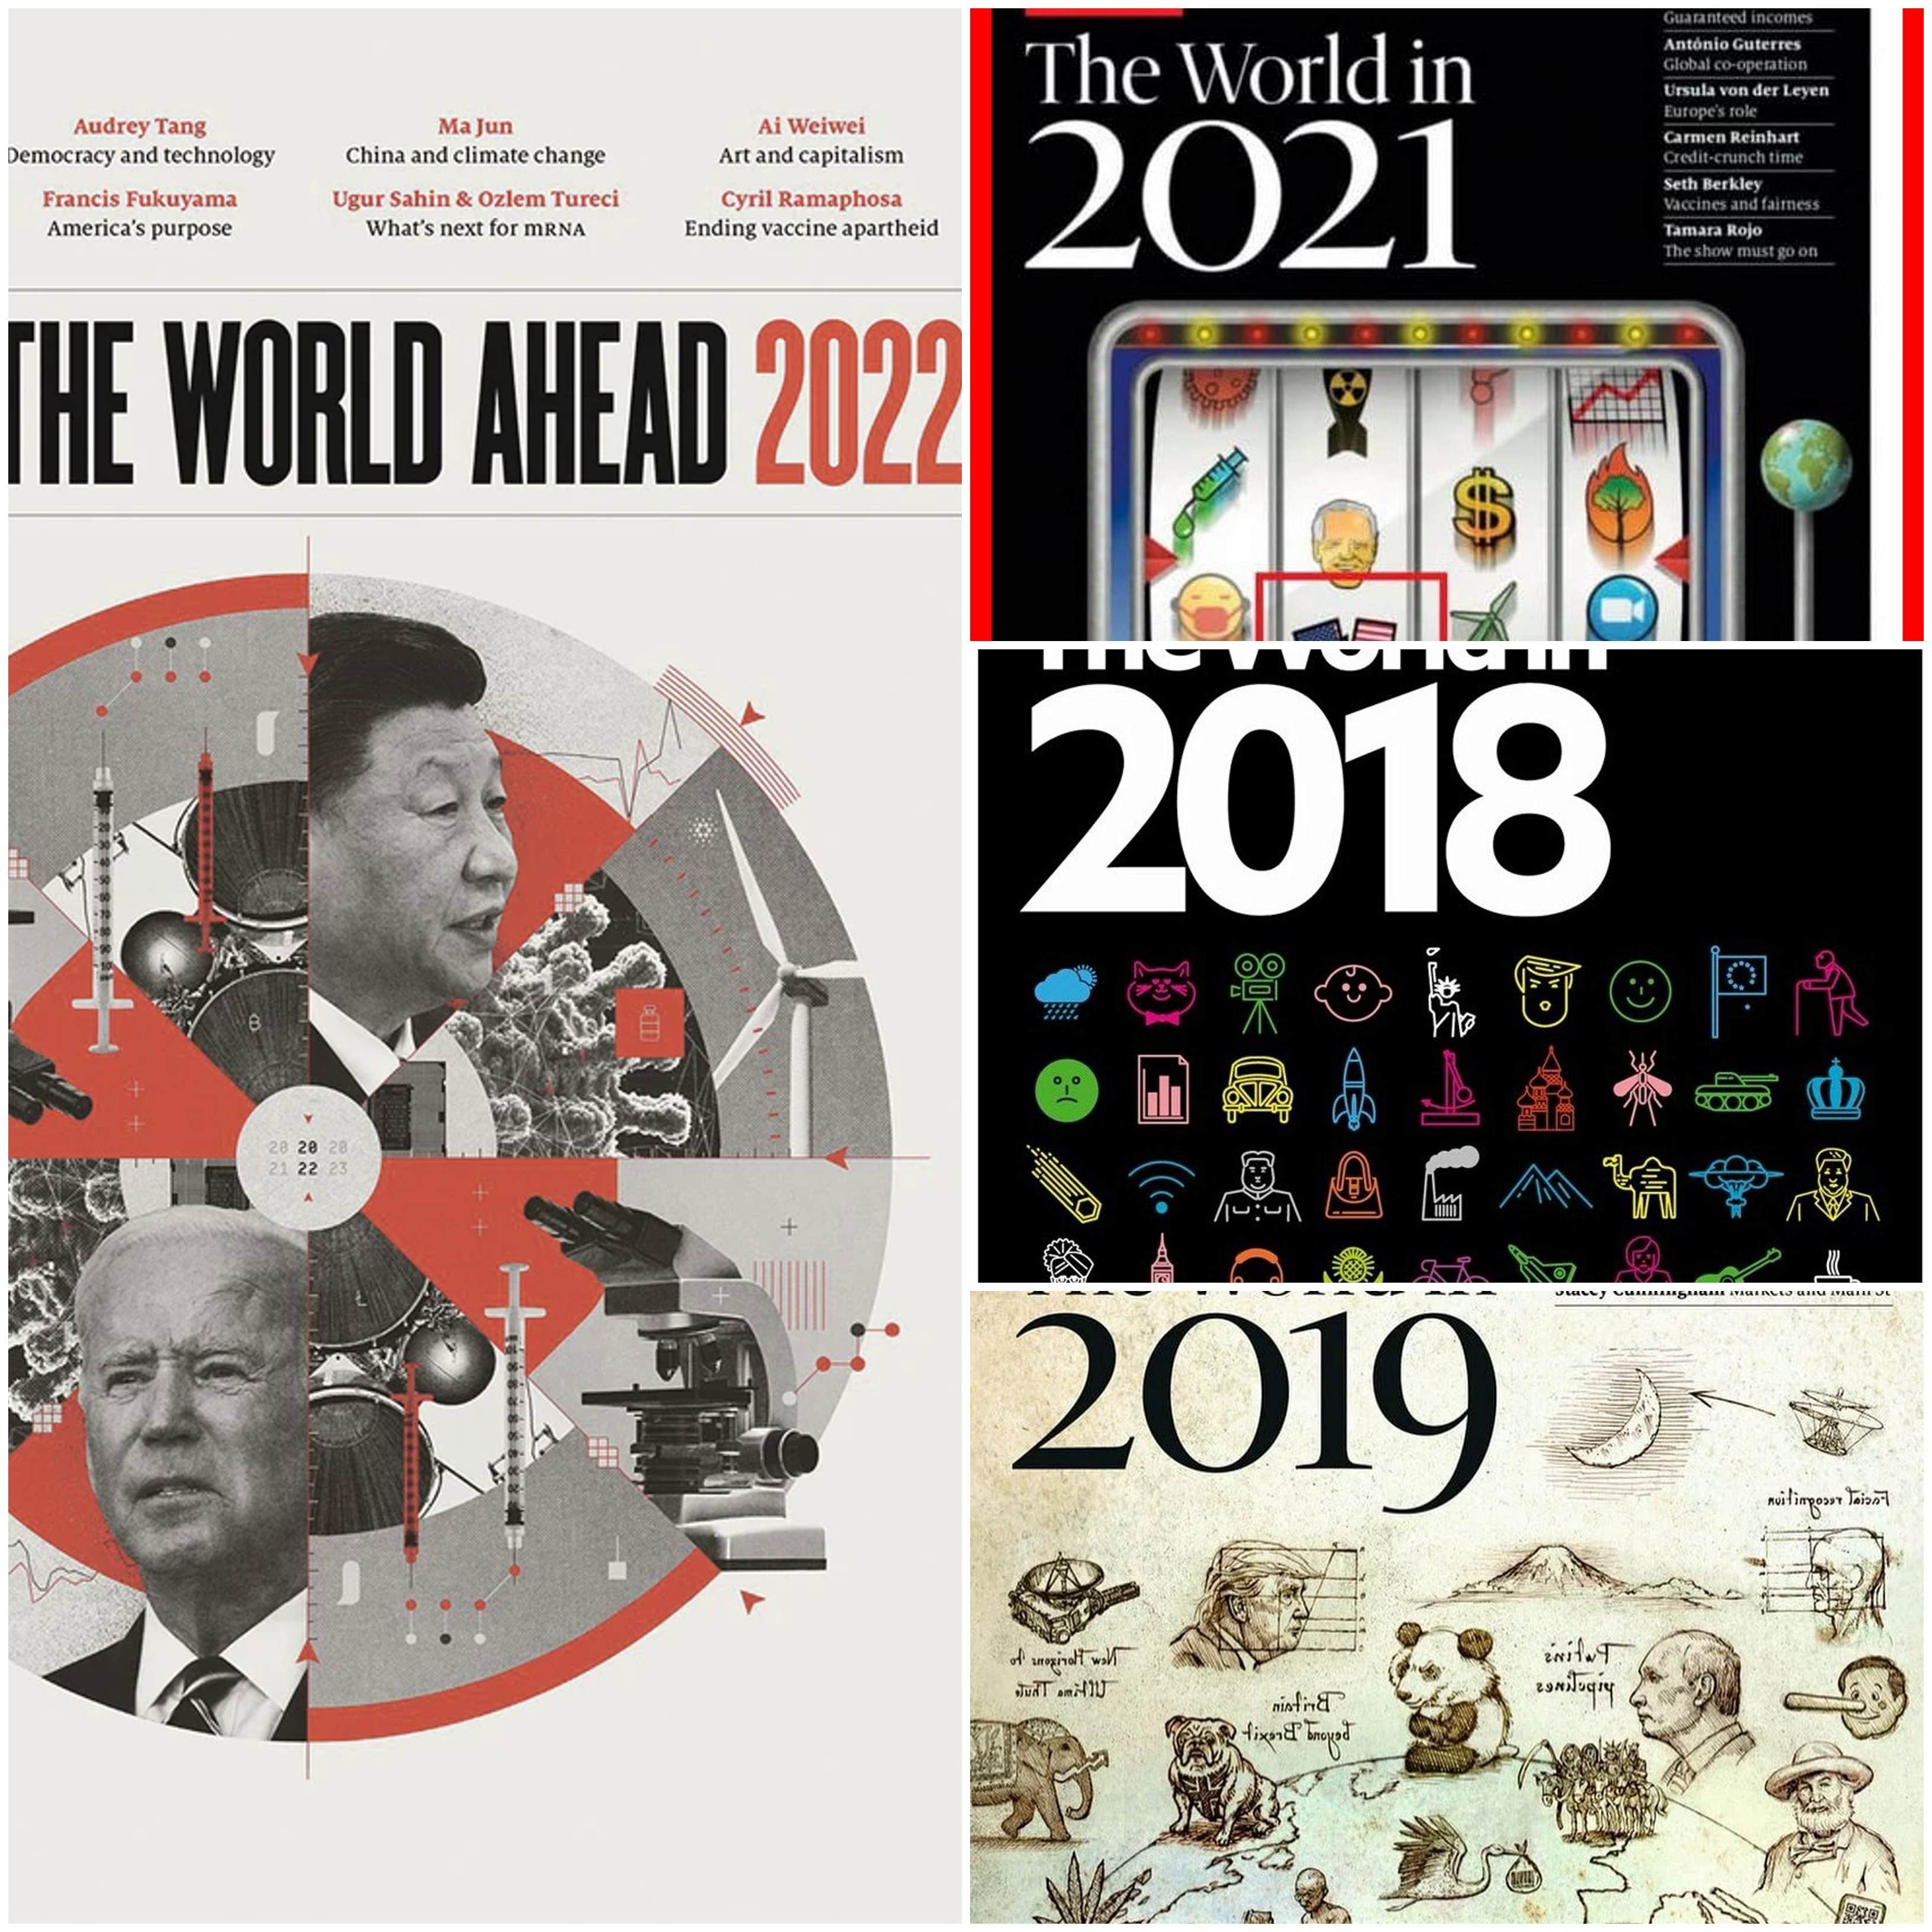 Magazine 2023. The Economist 2022 обложка. Ротшильд журнал экономист 2023. Обложка журнала the Economist сентябрь 2022. The Economist 2023 обложка.